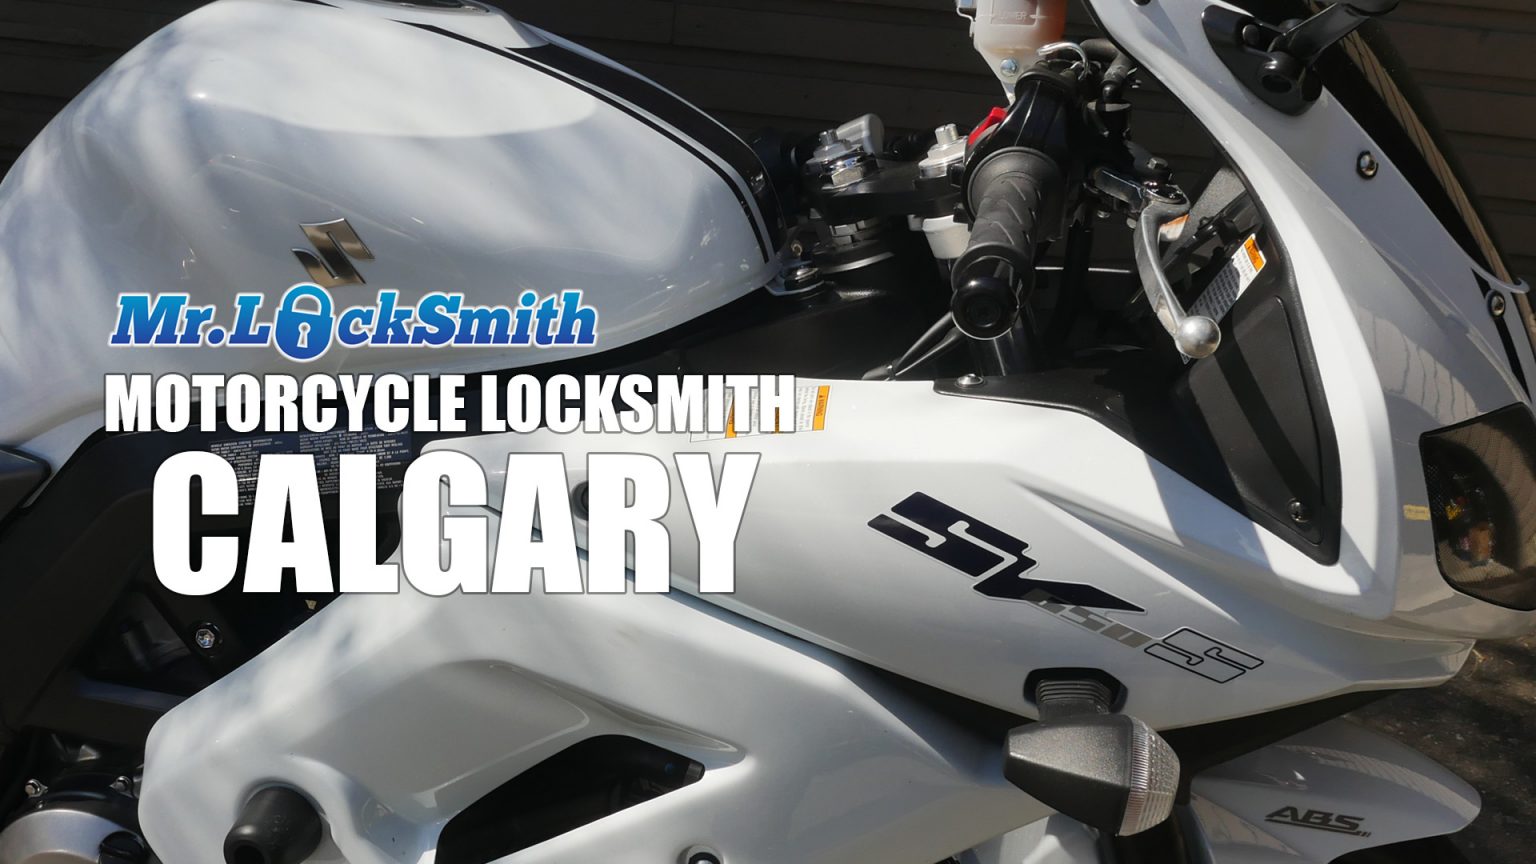 Motorcycle Locksmith Calgary - Mr Locksmith Calgary